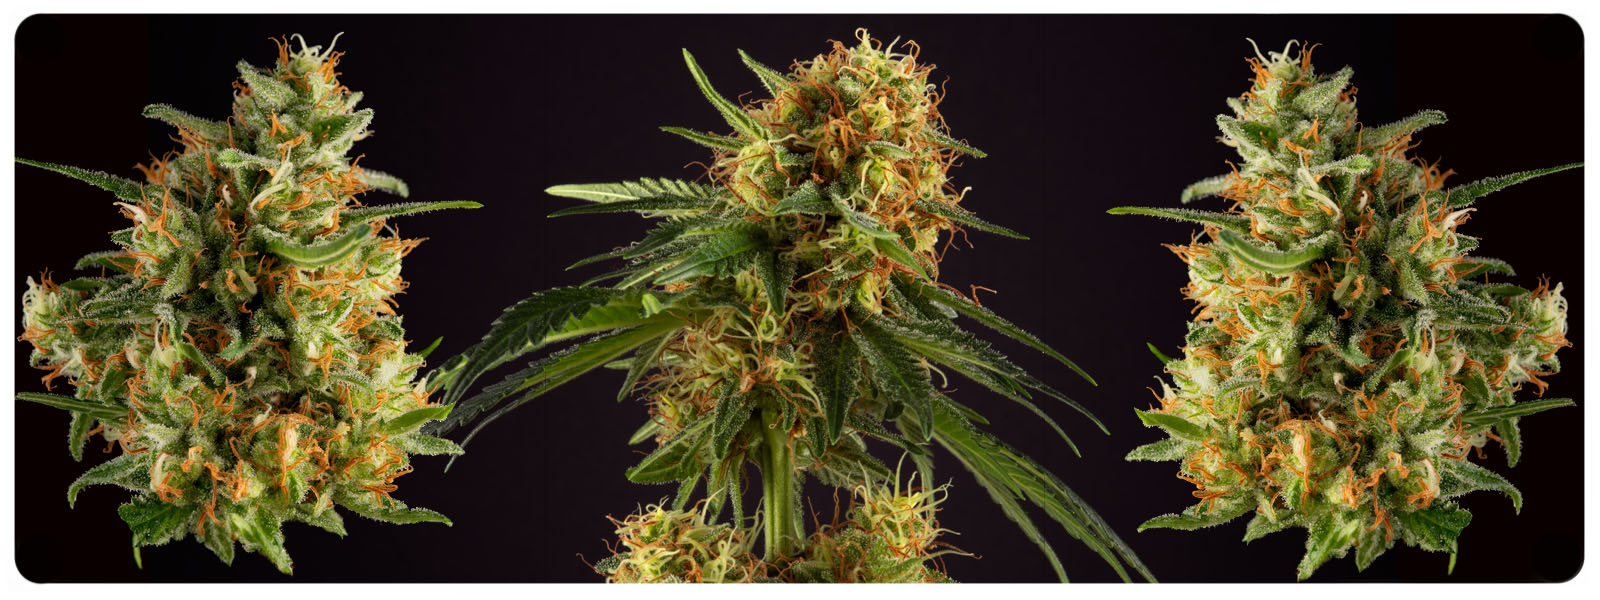 Regular madscientist cannabis seeds for medicinal use